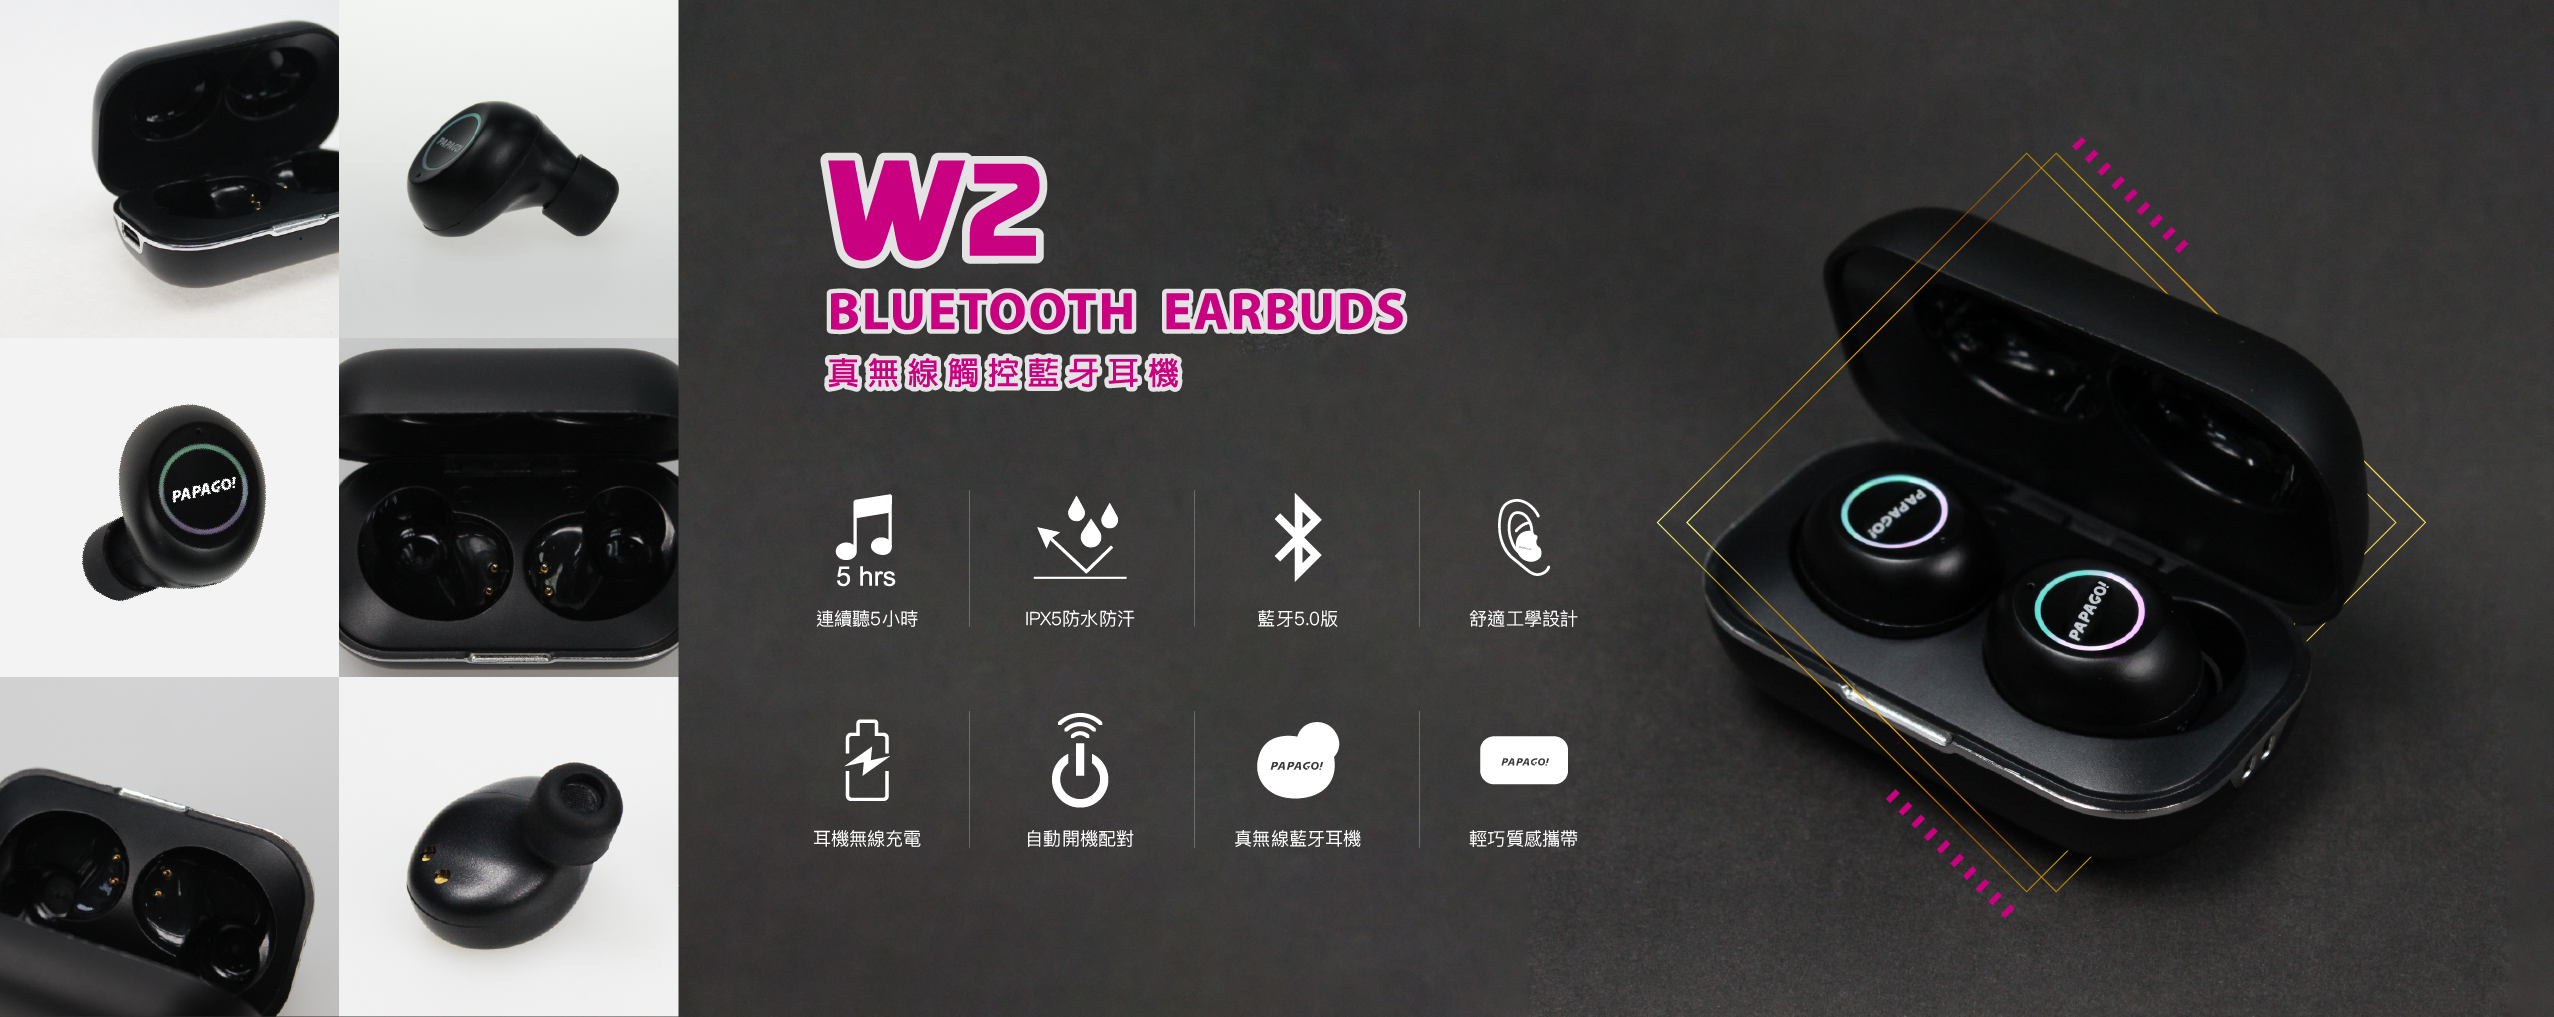 W2 真無線觸控藍牙耳機